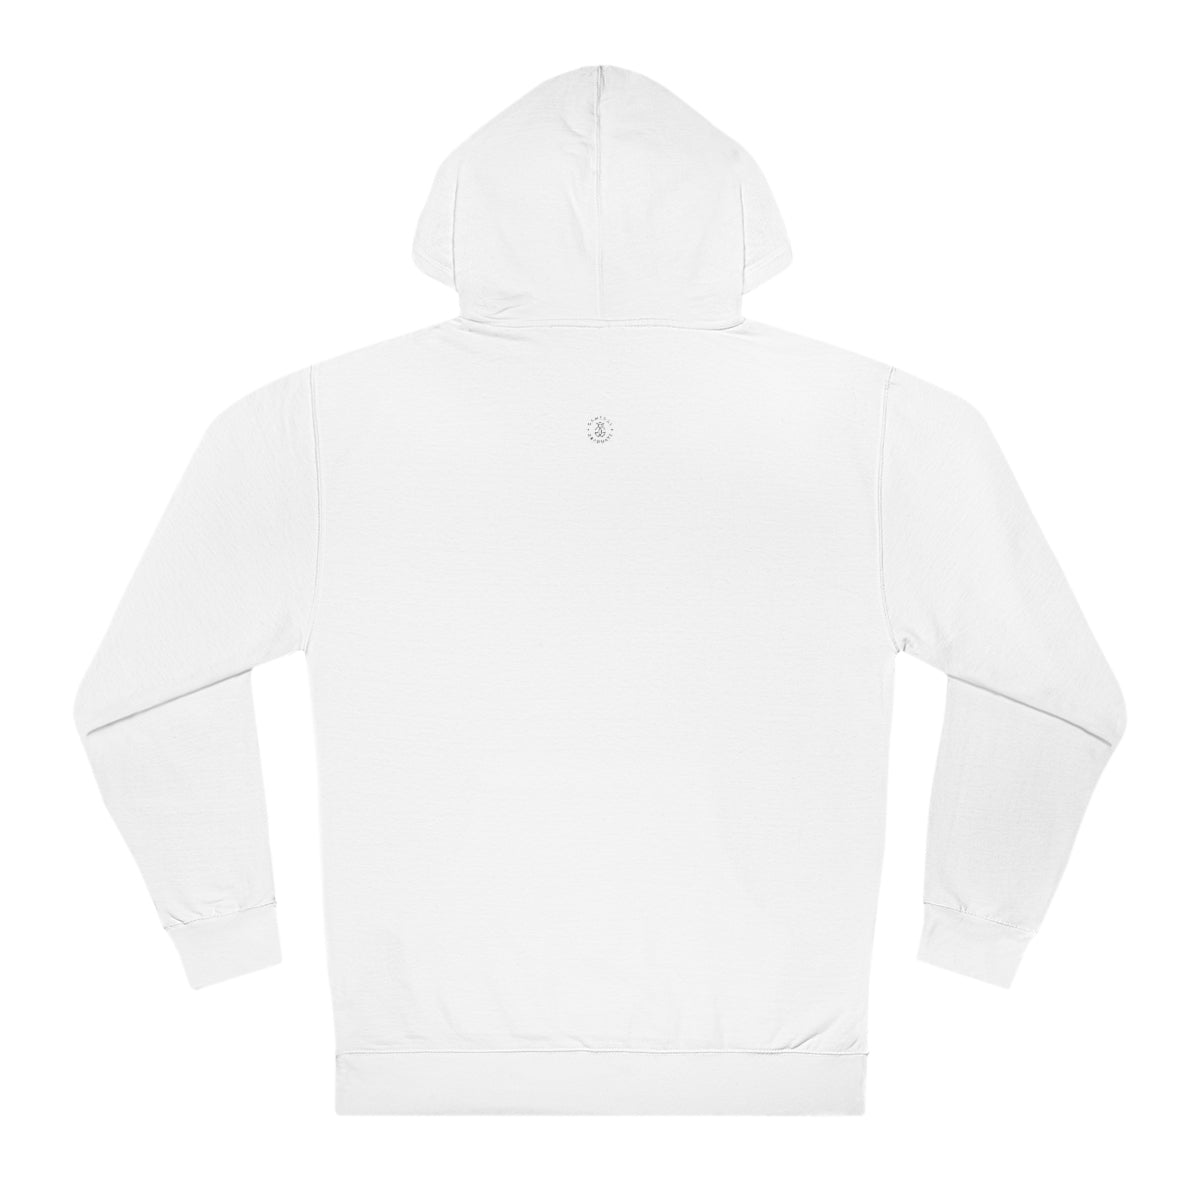 Birmingham Southern Hooded Sweatshirt - GG - ITC